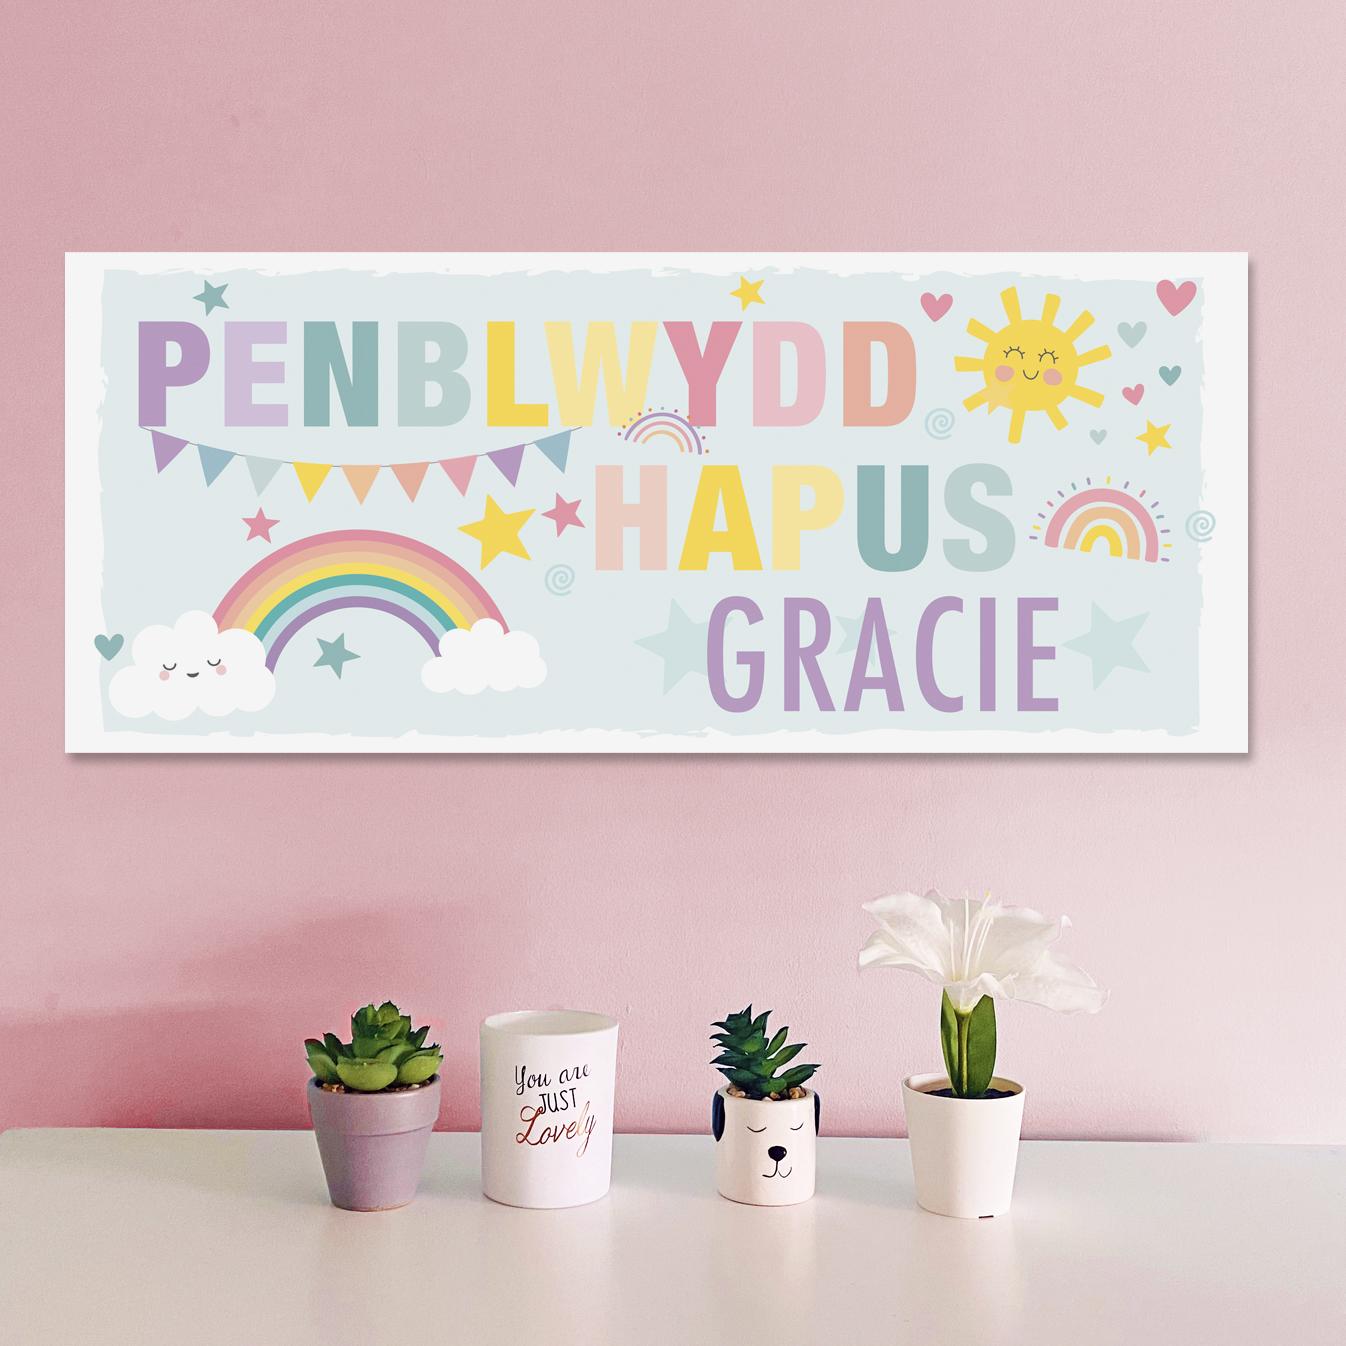 Welsh birthday banners